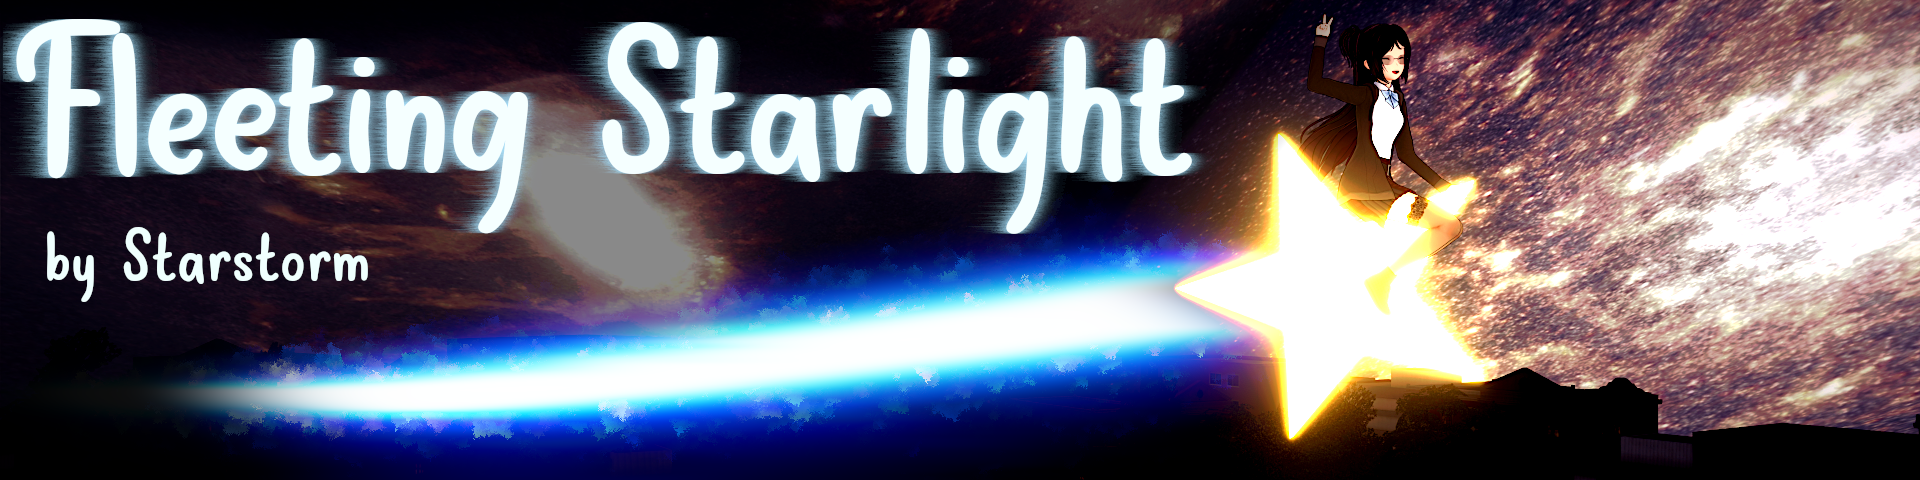 Fleeting Starlight